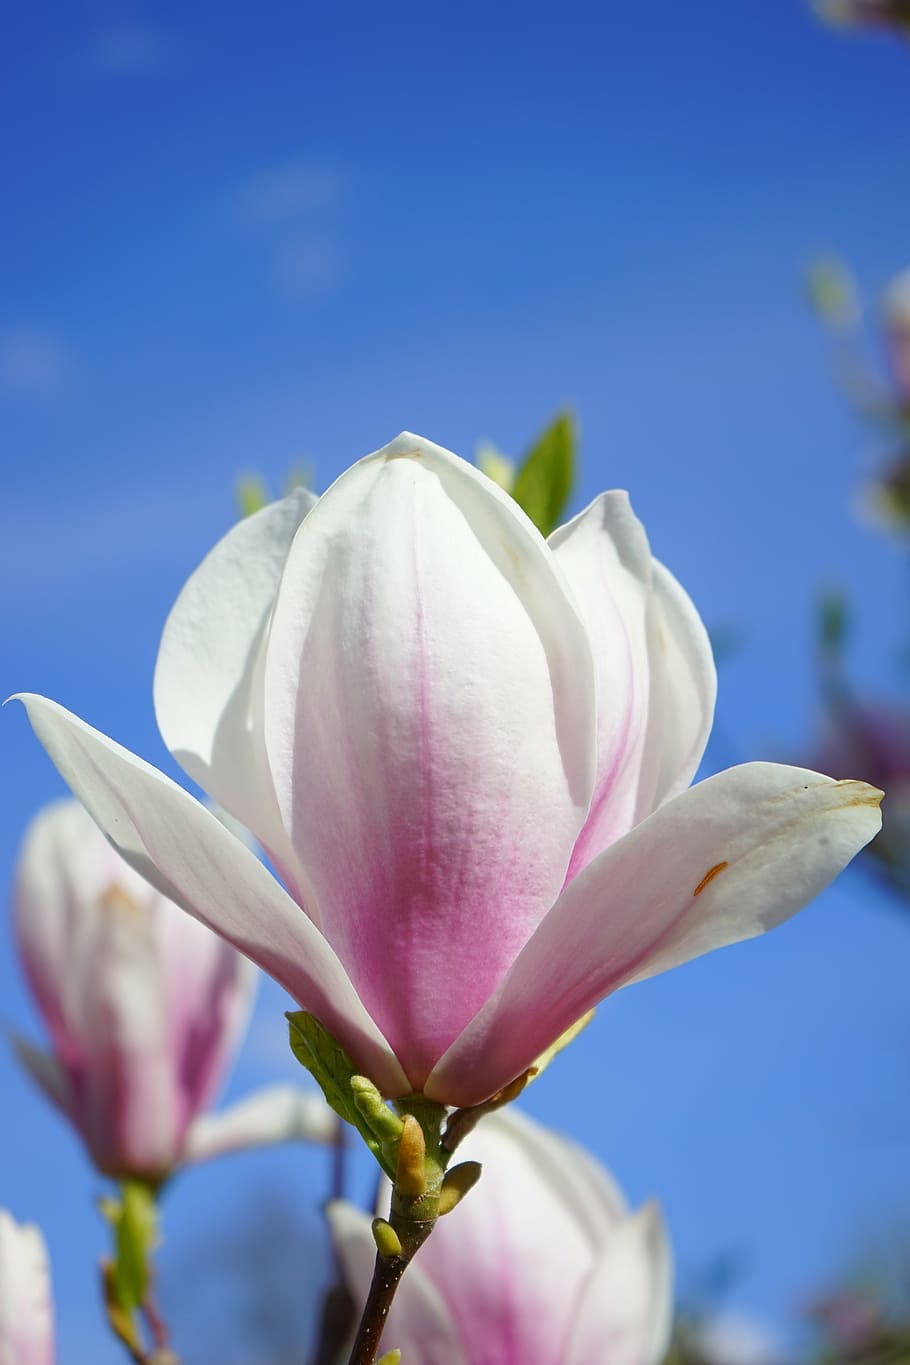 putih, warna merah muda, bunga petaled, mekar foto close-up, magnolia, magnolia blossom, bunga, blütenmeer, tanaman hias, magnoliengewaechs